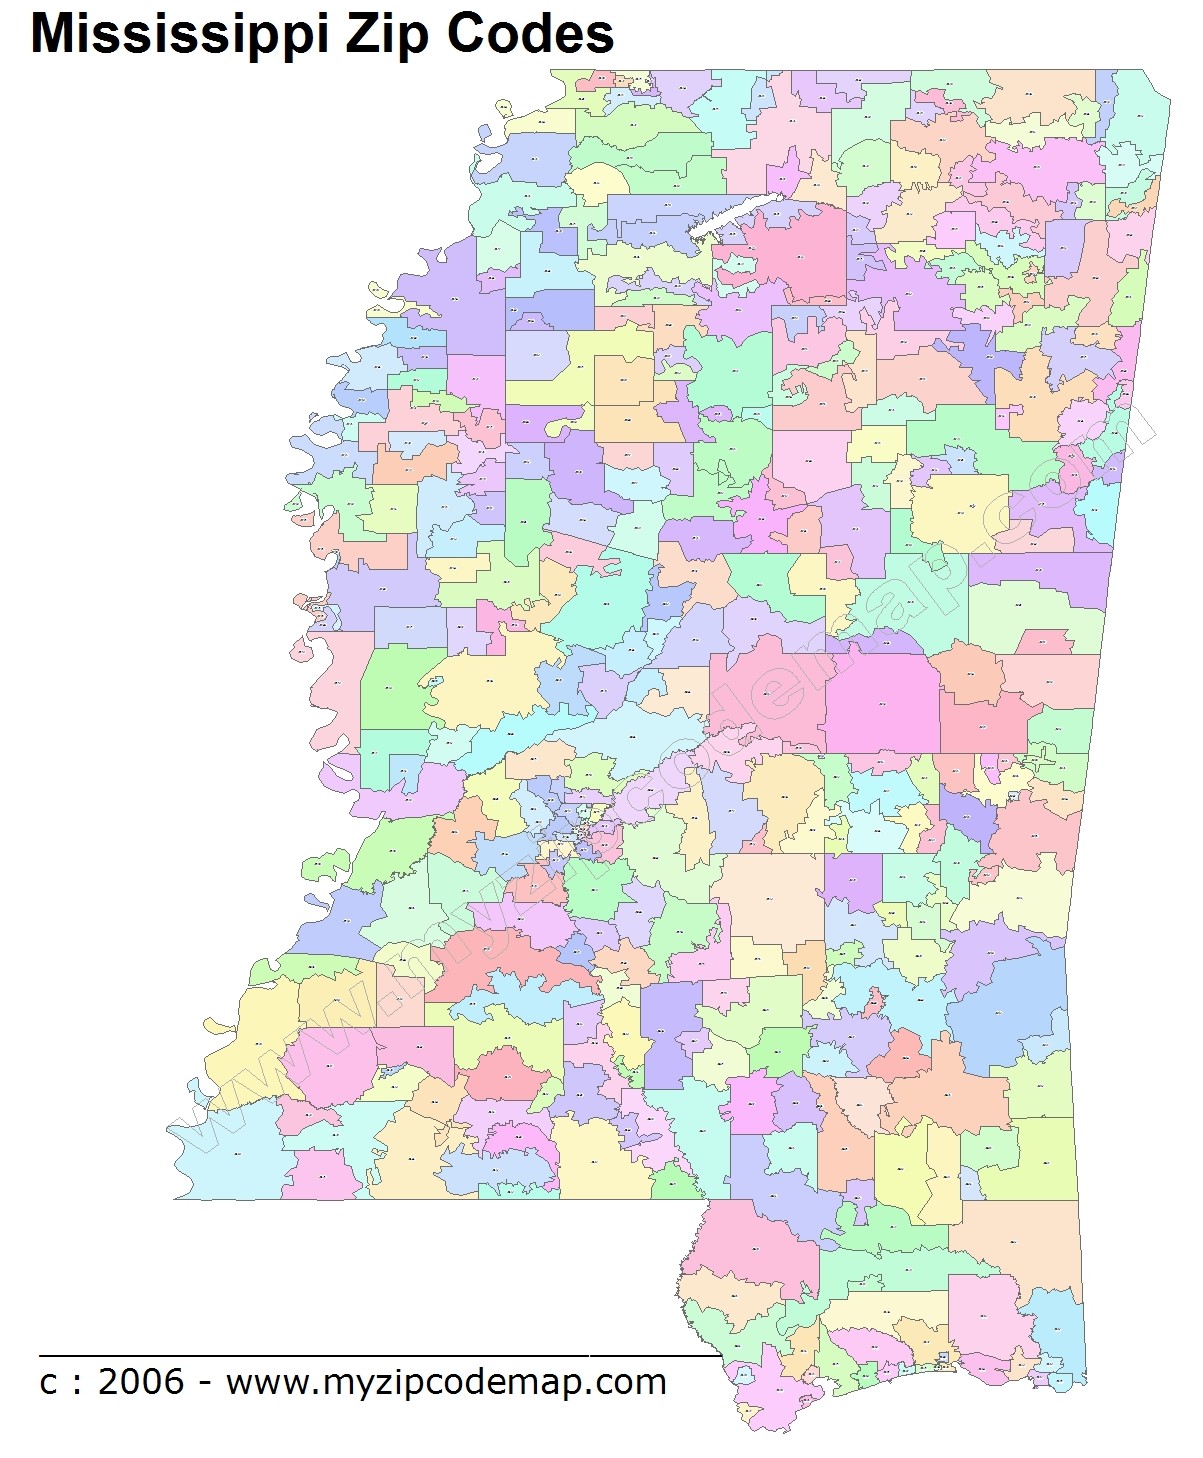 Mississippi Zip Code Maps Free Mississippi Zip Code Maps